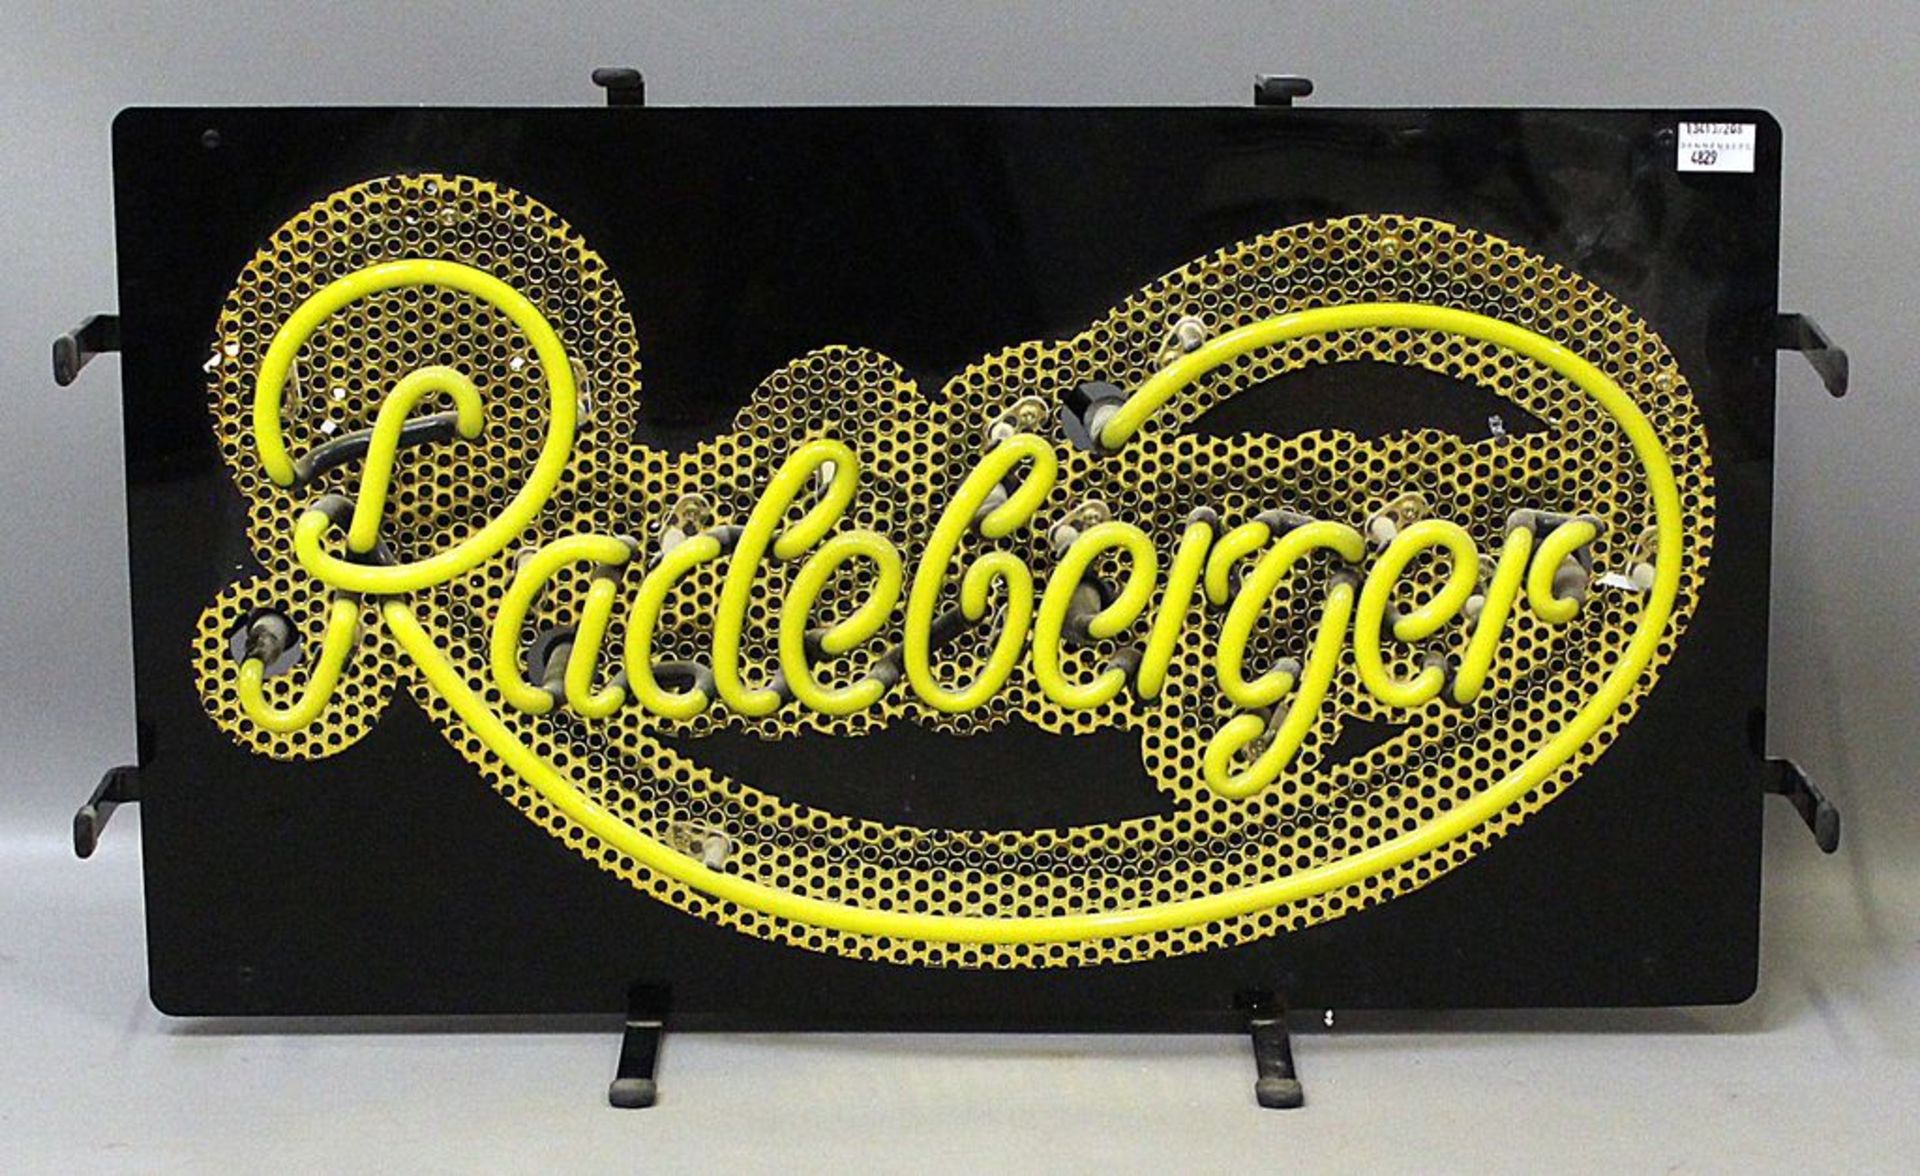 Neon-Reklame "Radeberger".